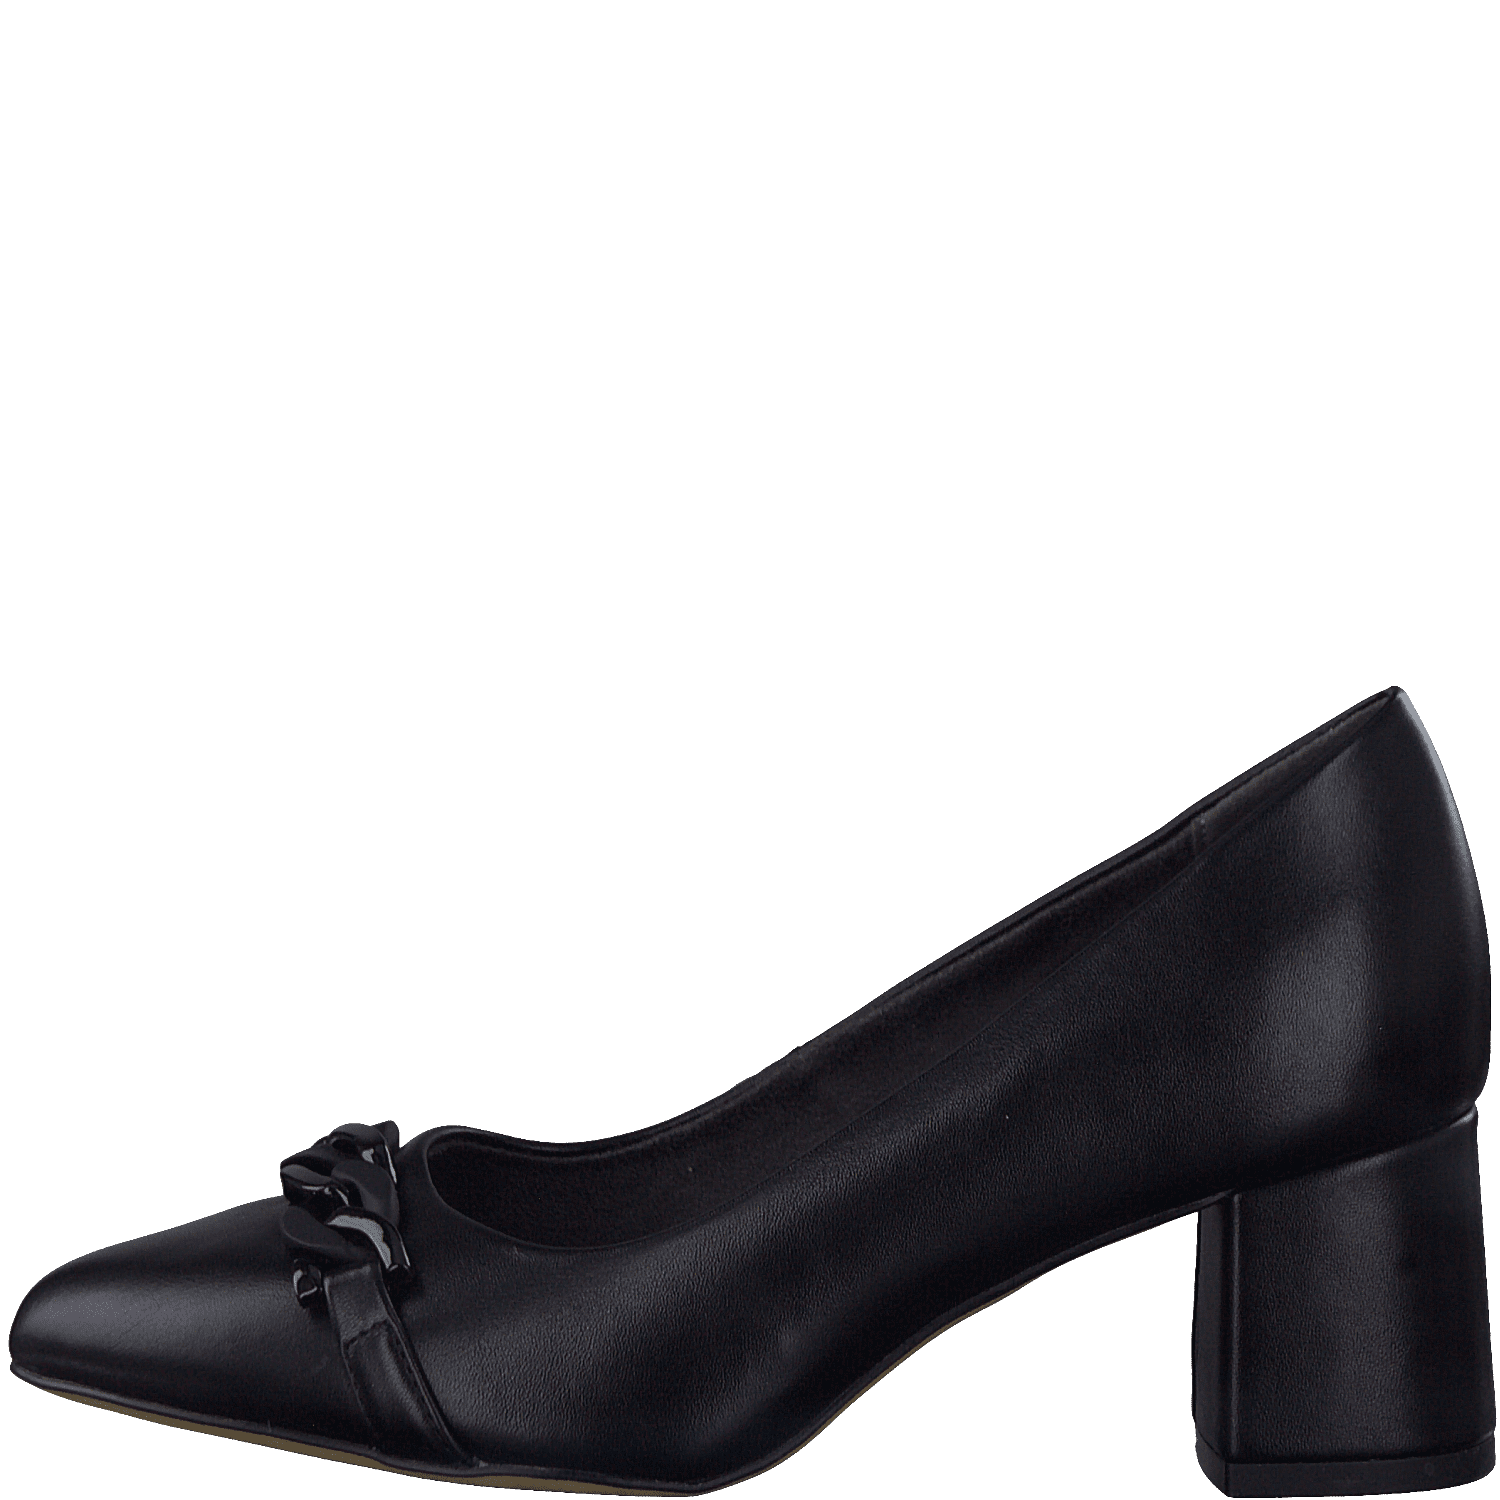 Jana 8-22463 -41- Ladies Court Shoe in Black |Jana | Wisemans | Bantry | Shoe Shop | West Cork | Munster | Ireland